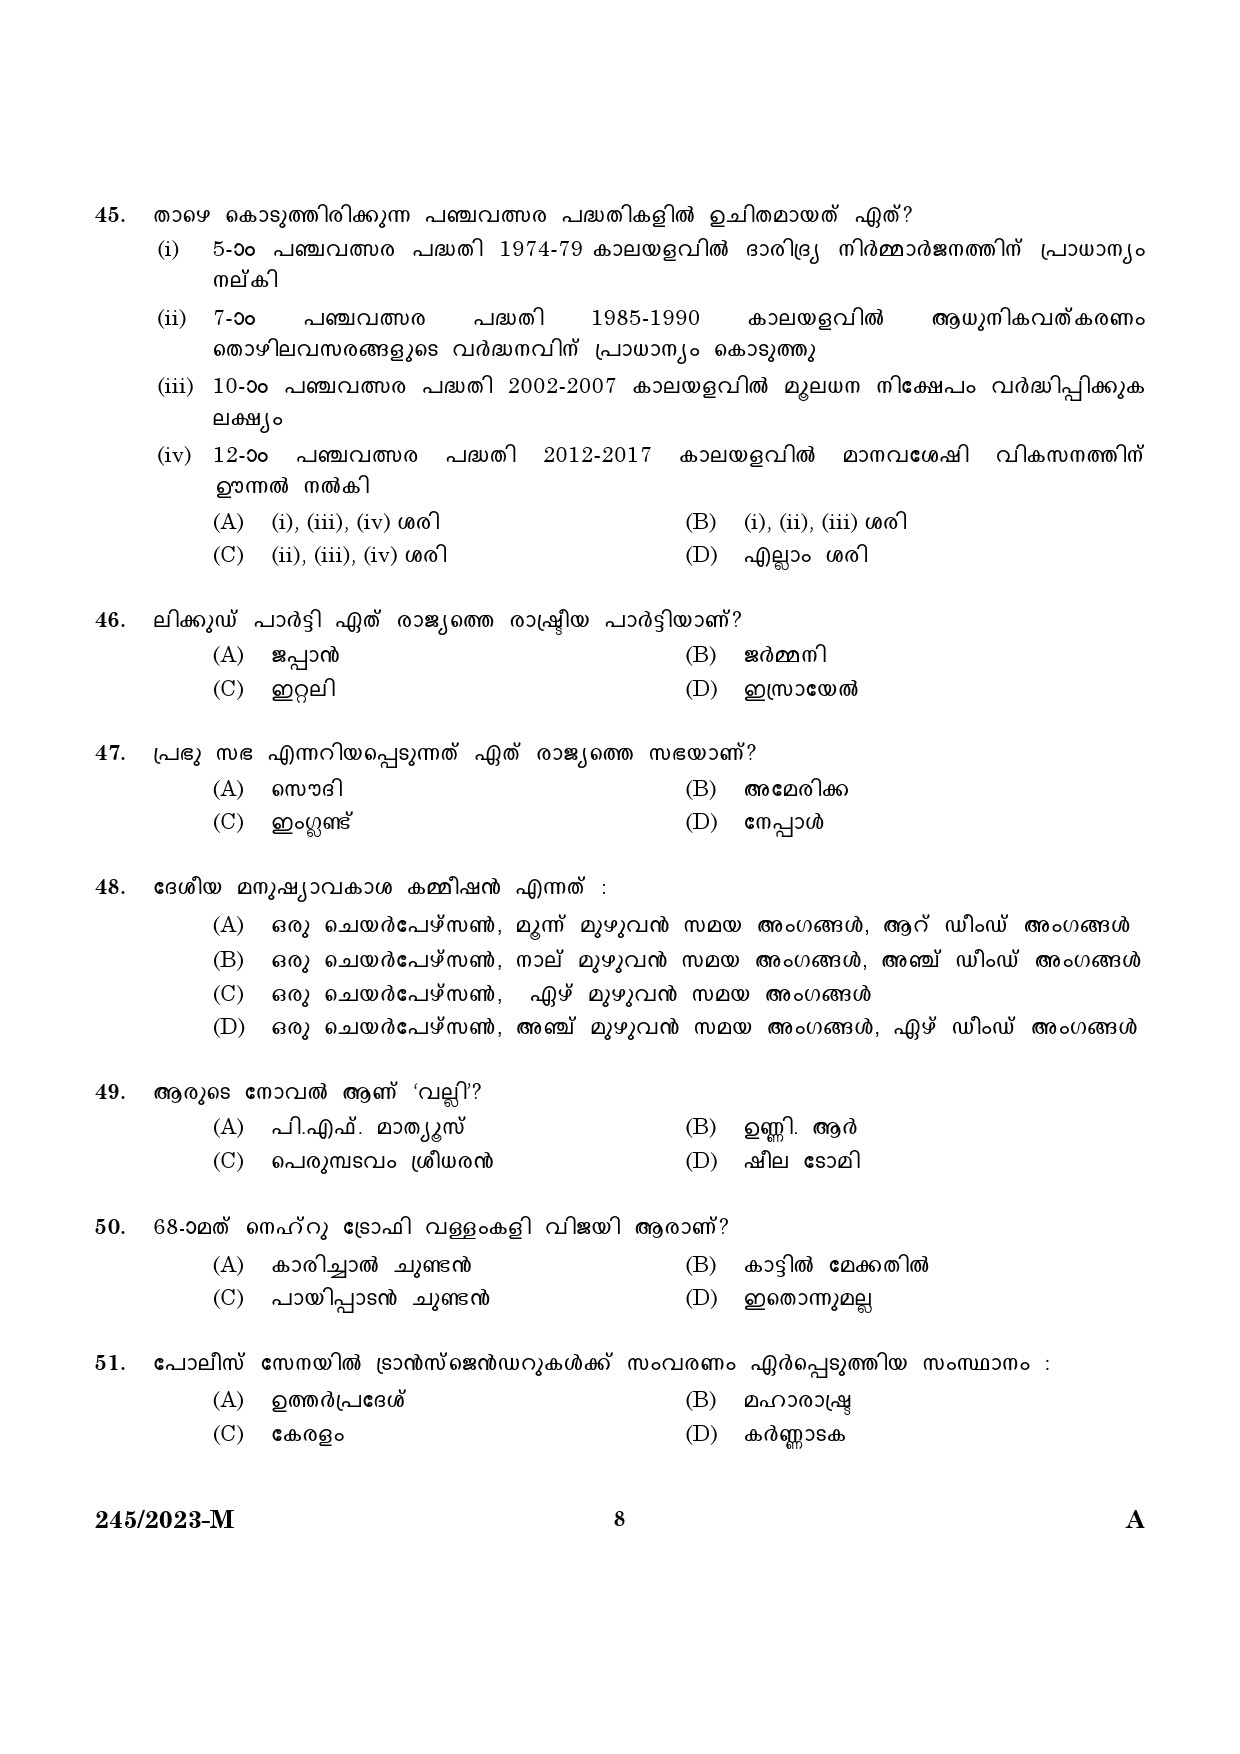 KPSC LGS Malayalam Exam 2023 Code 2452023 M 6